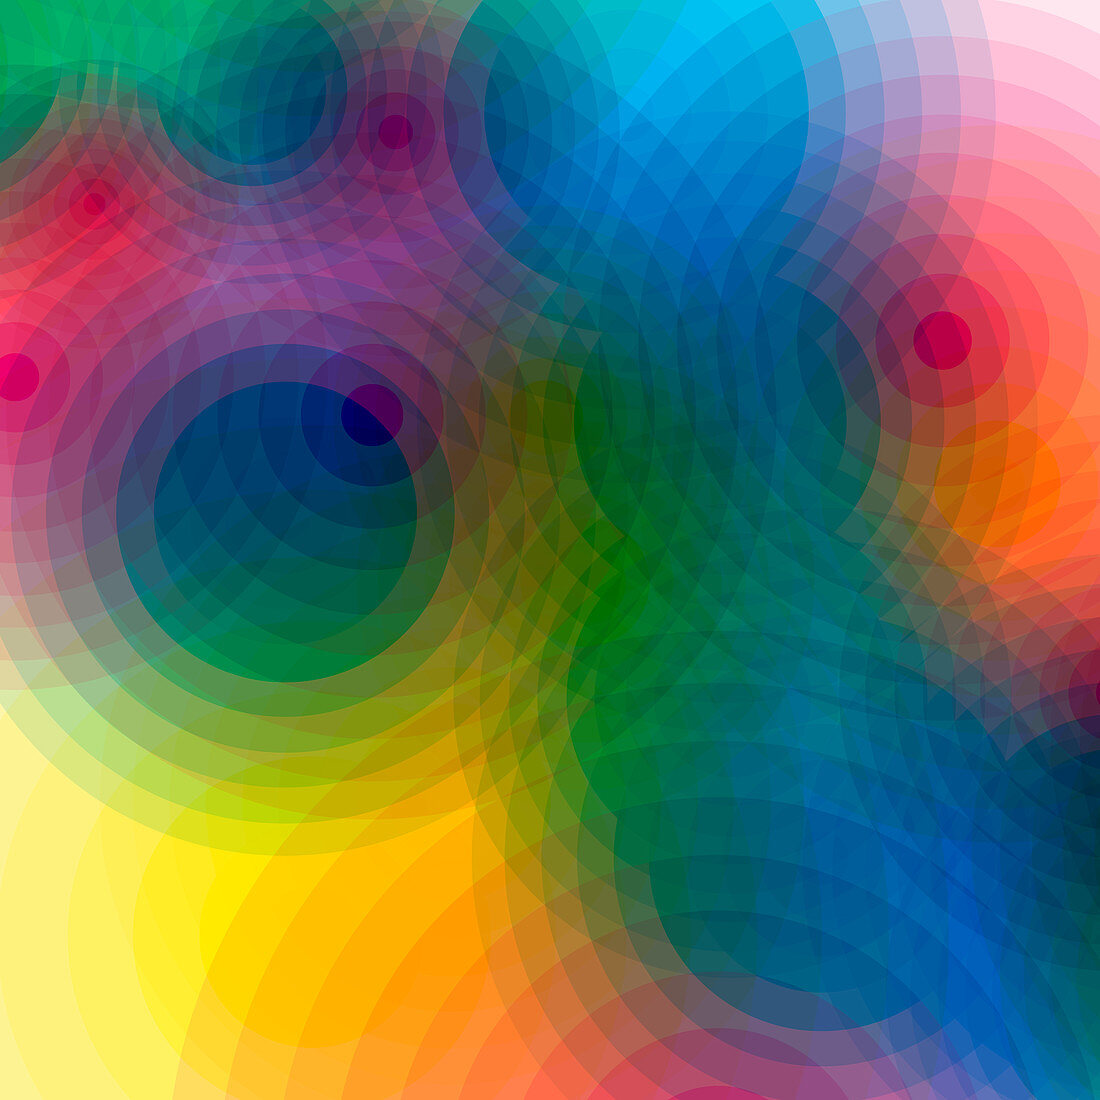 Abstract pattern of circles, illustration